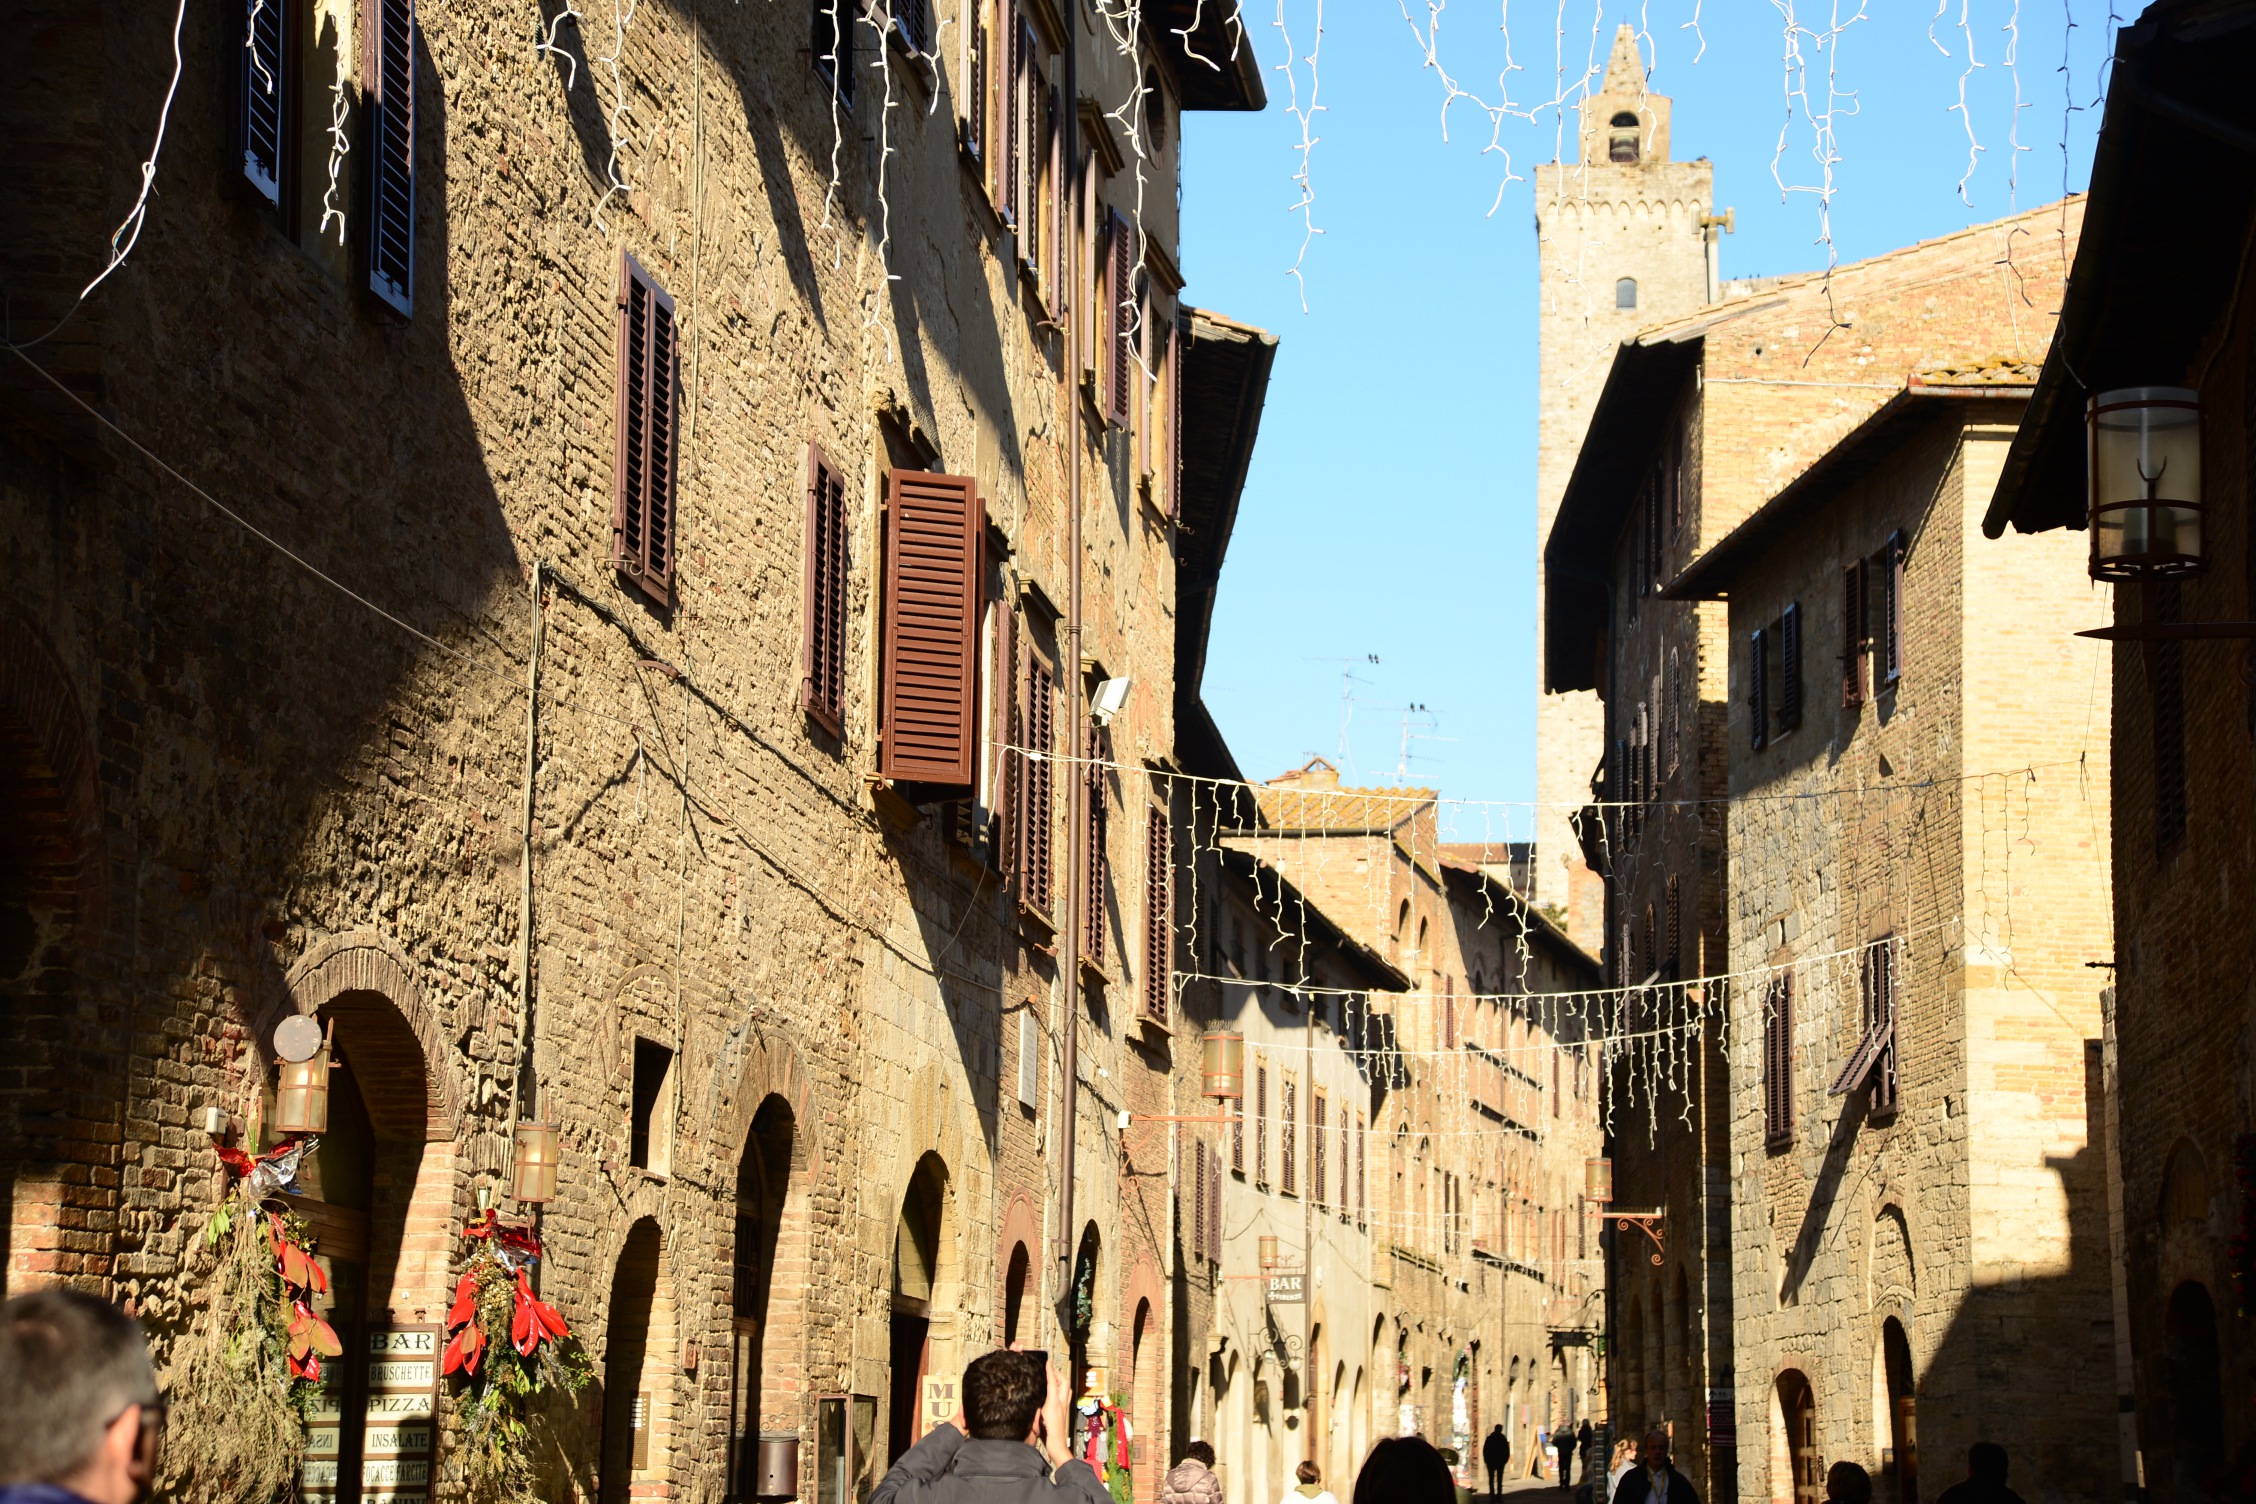 Town of San Gimignano